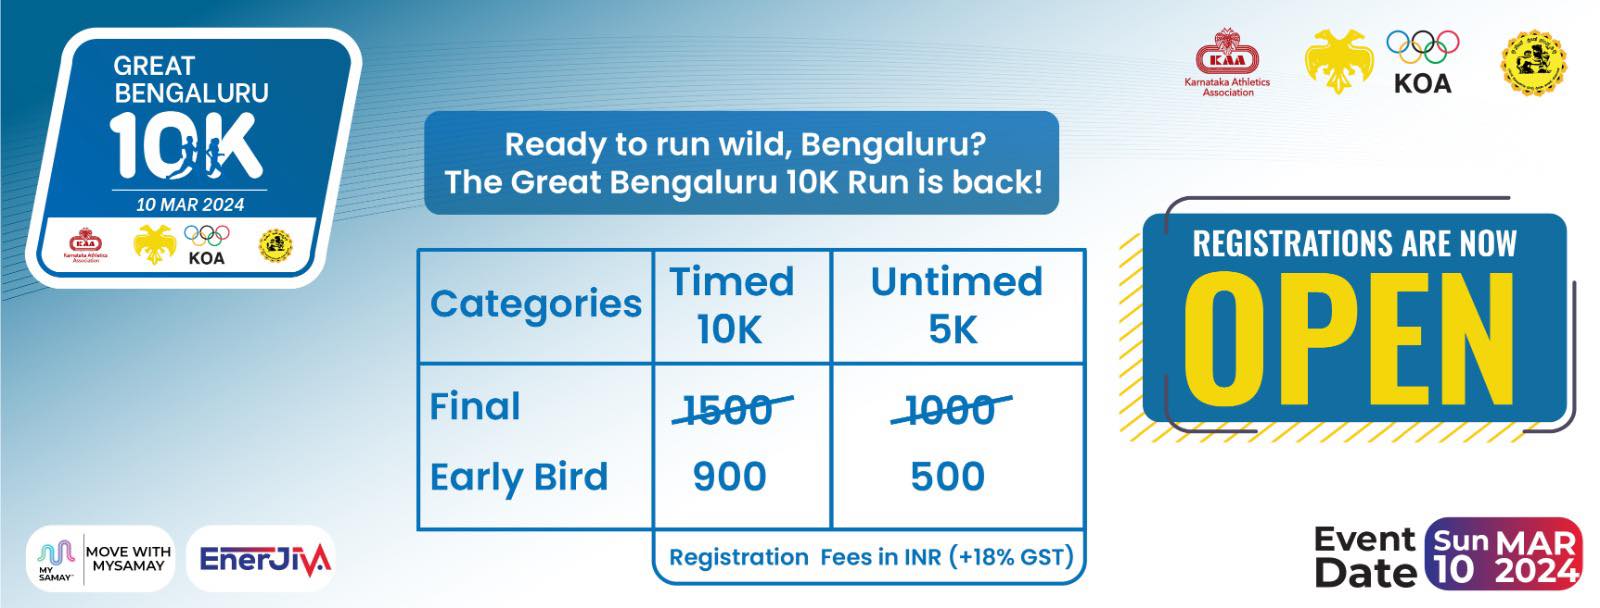 Great Bengaluru 10k 2024